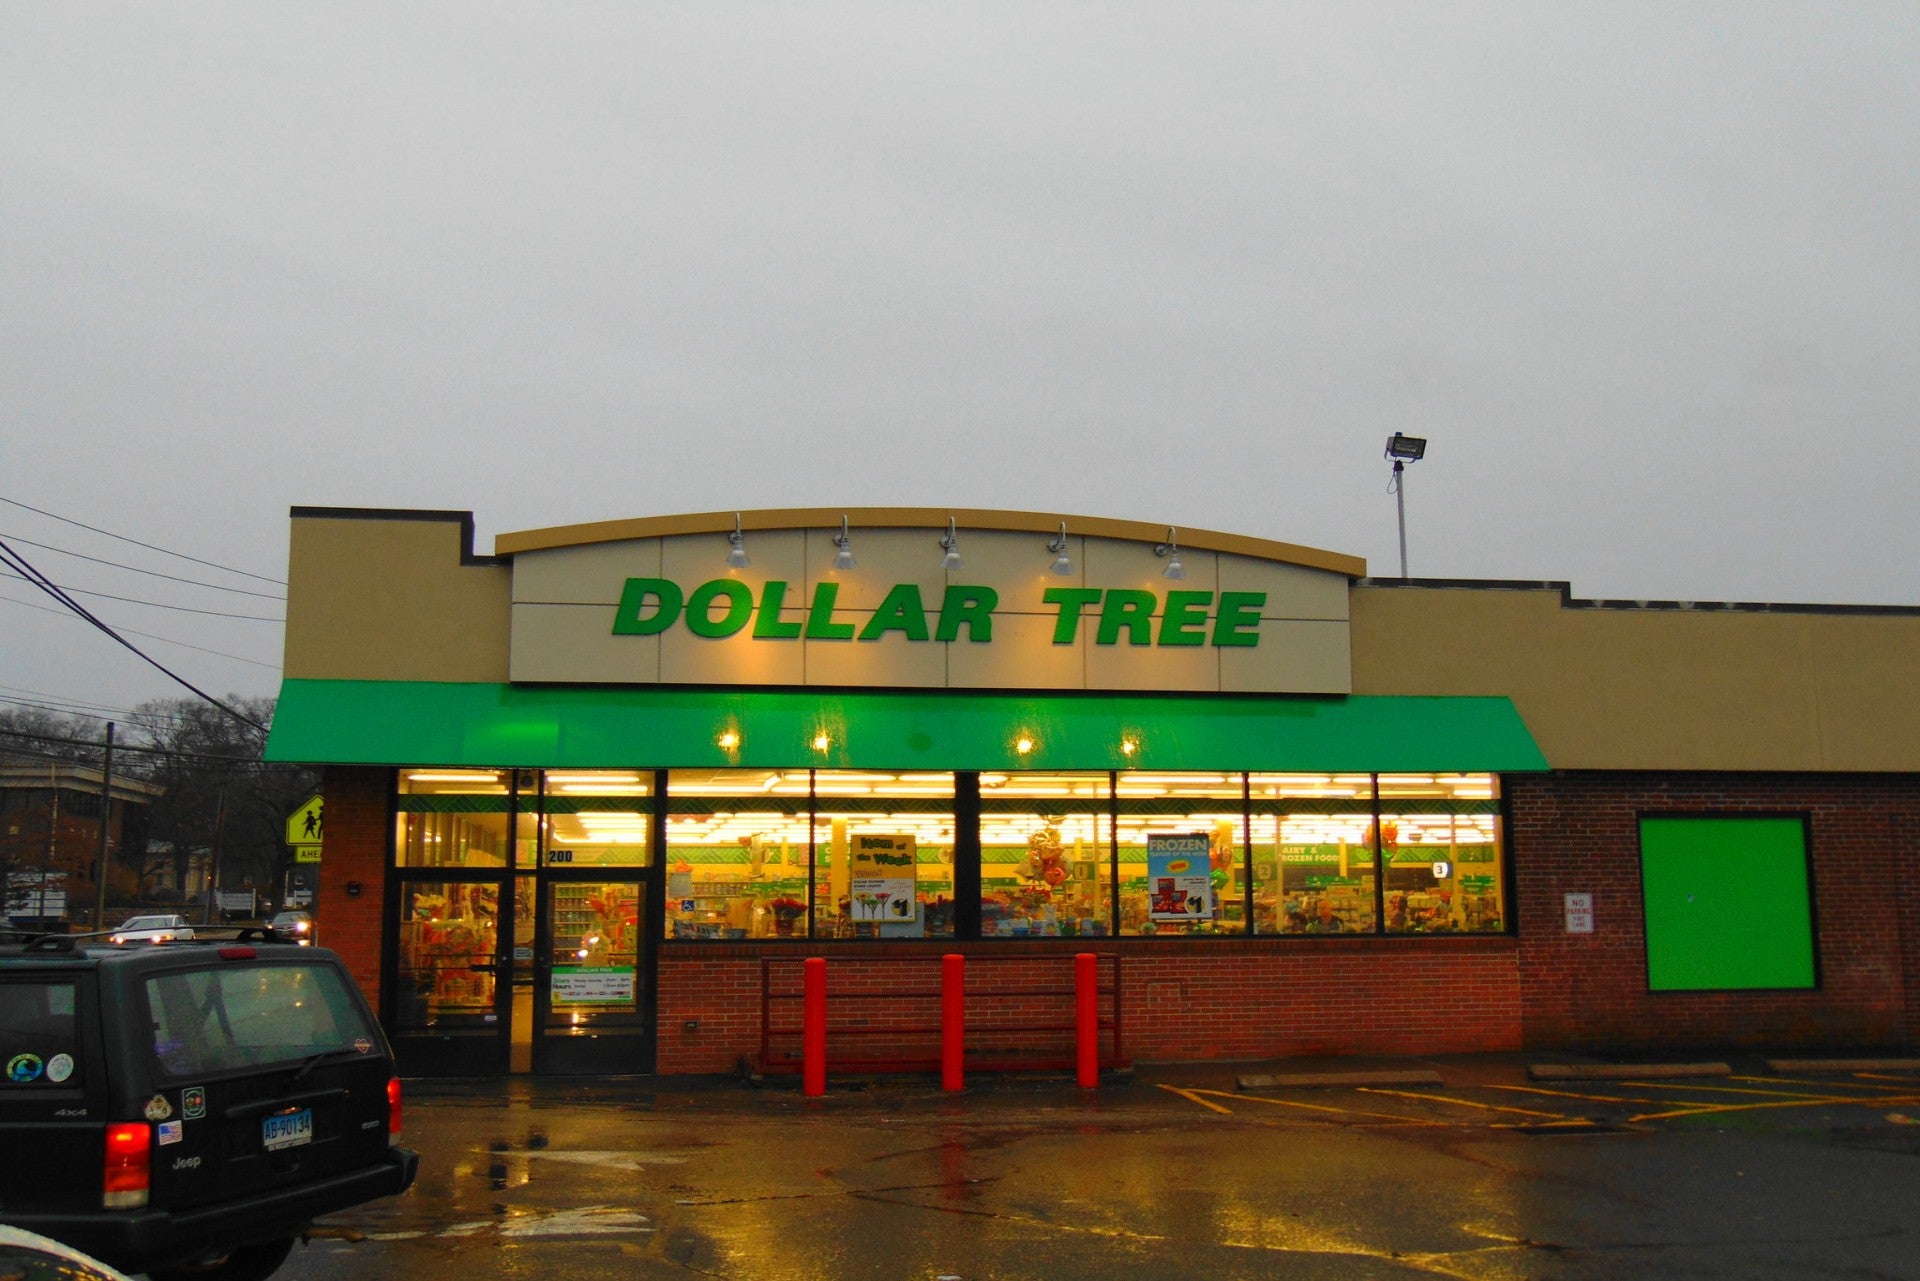 Dollar Tree plans to recruit thousands of associates